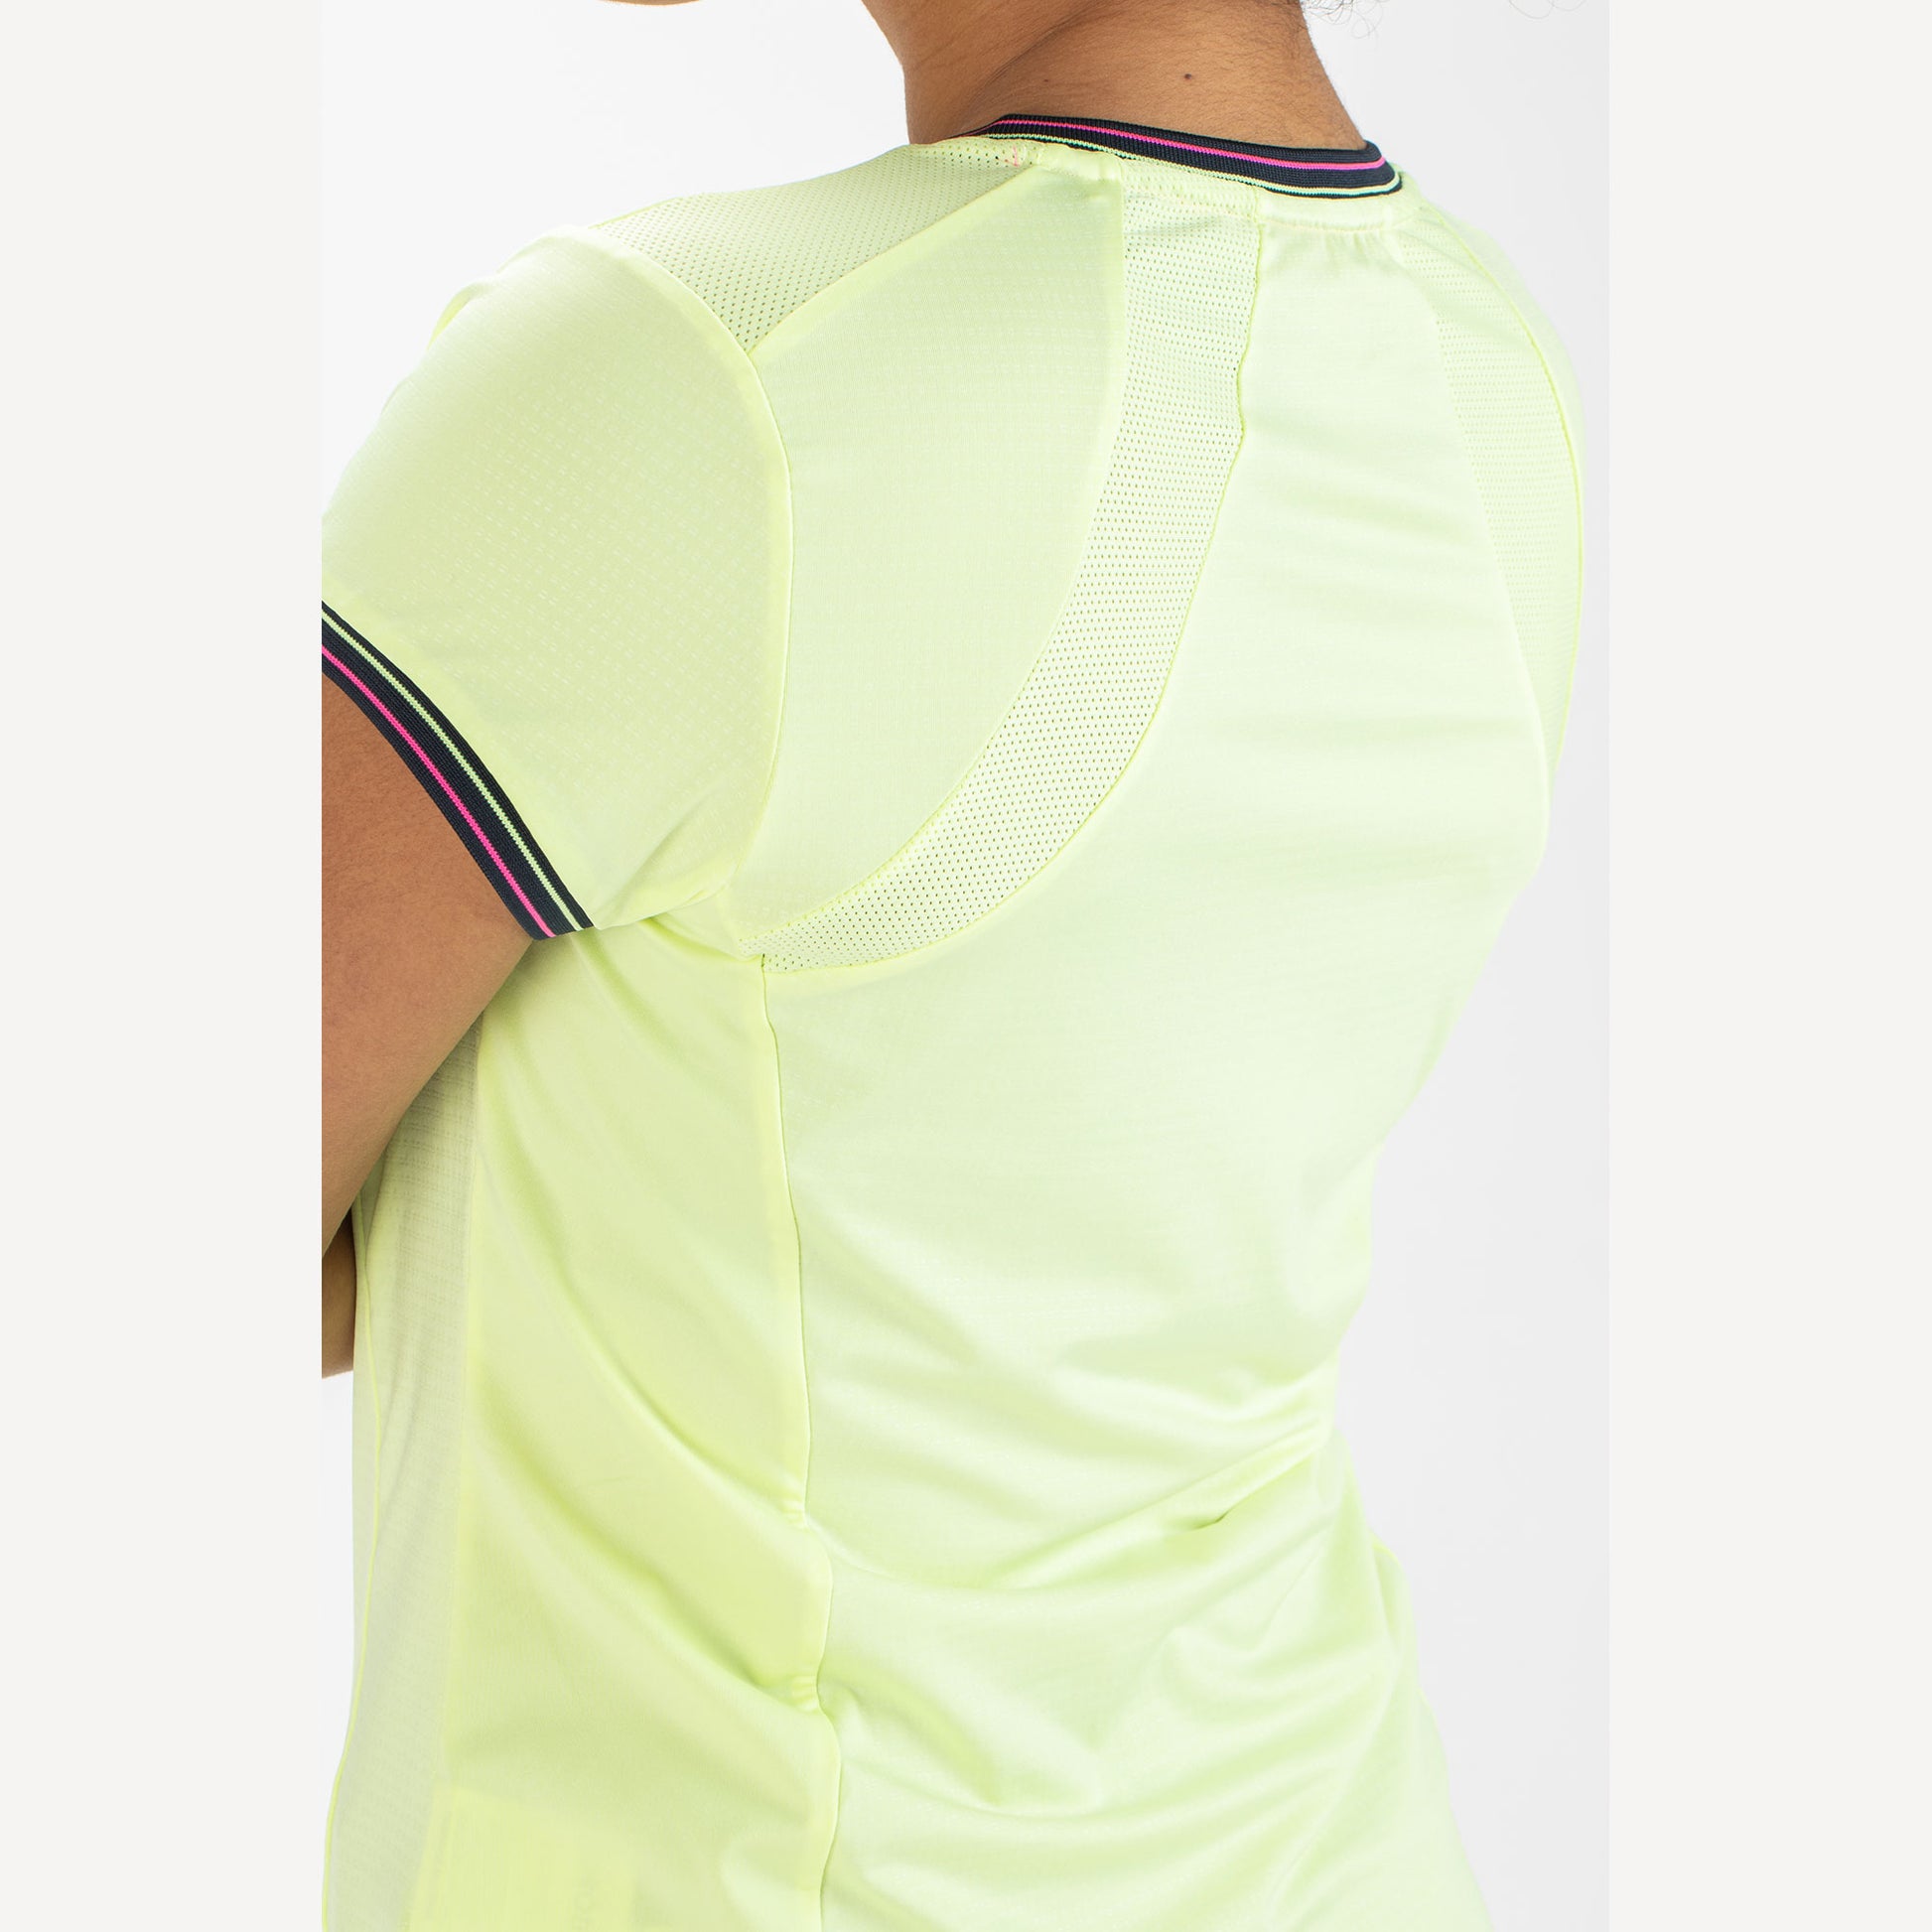 Sjeng Sports Dorothee Women's Tennis Shirt Yellow (4)